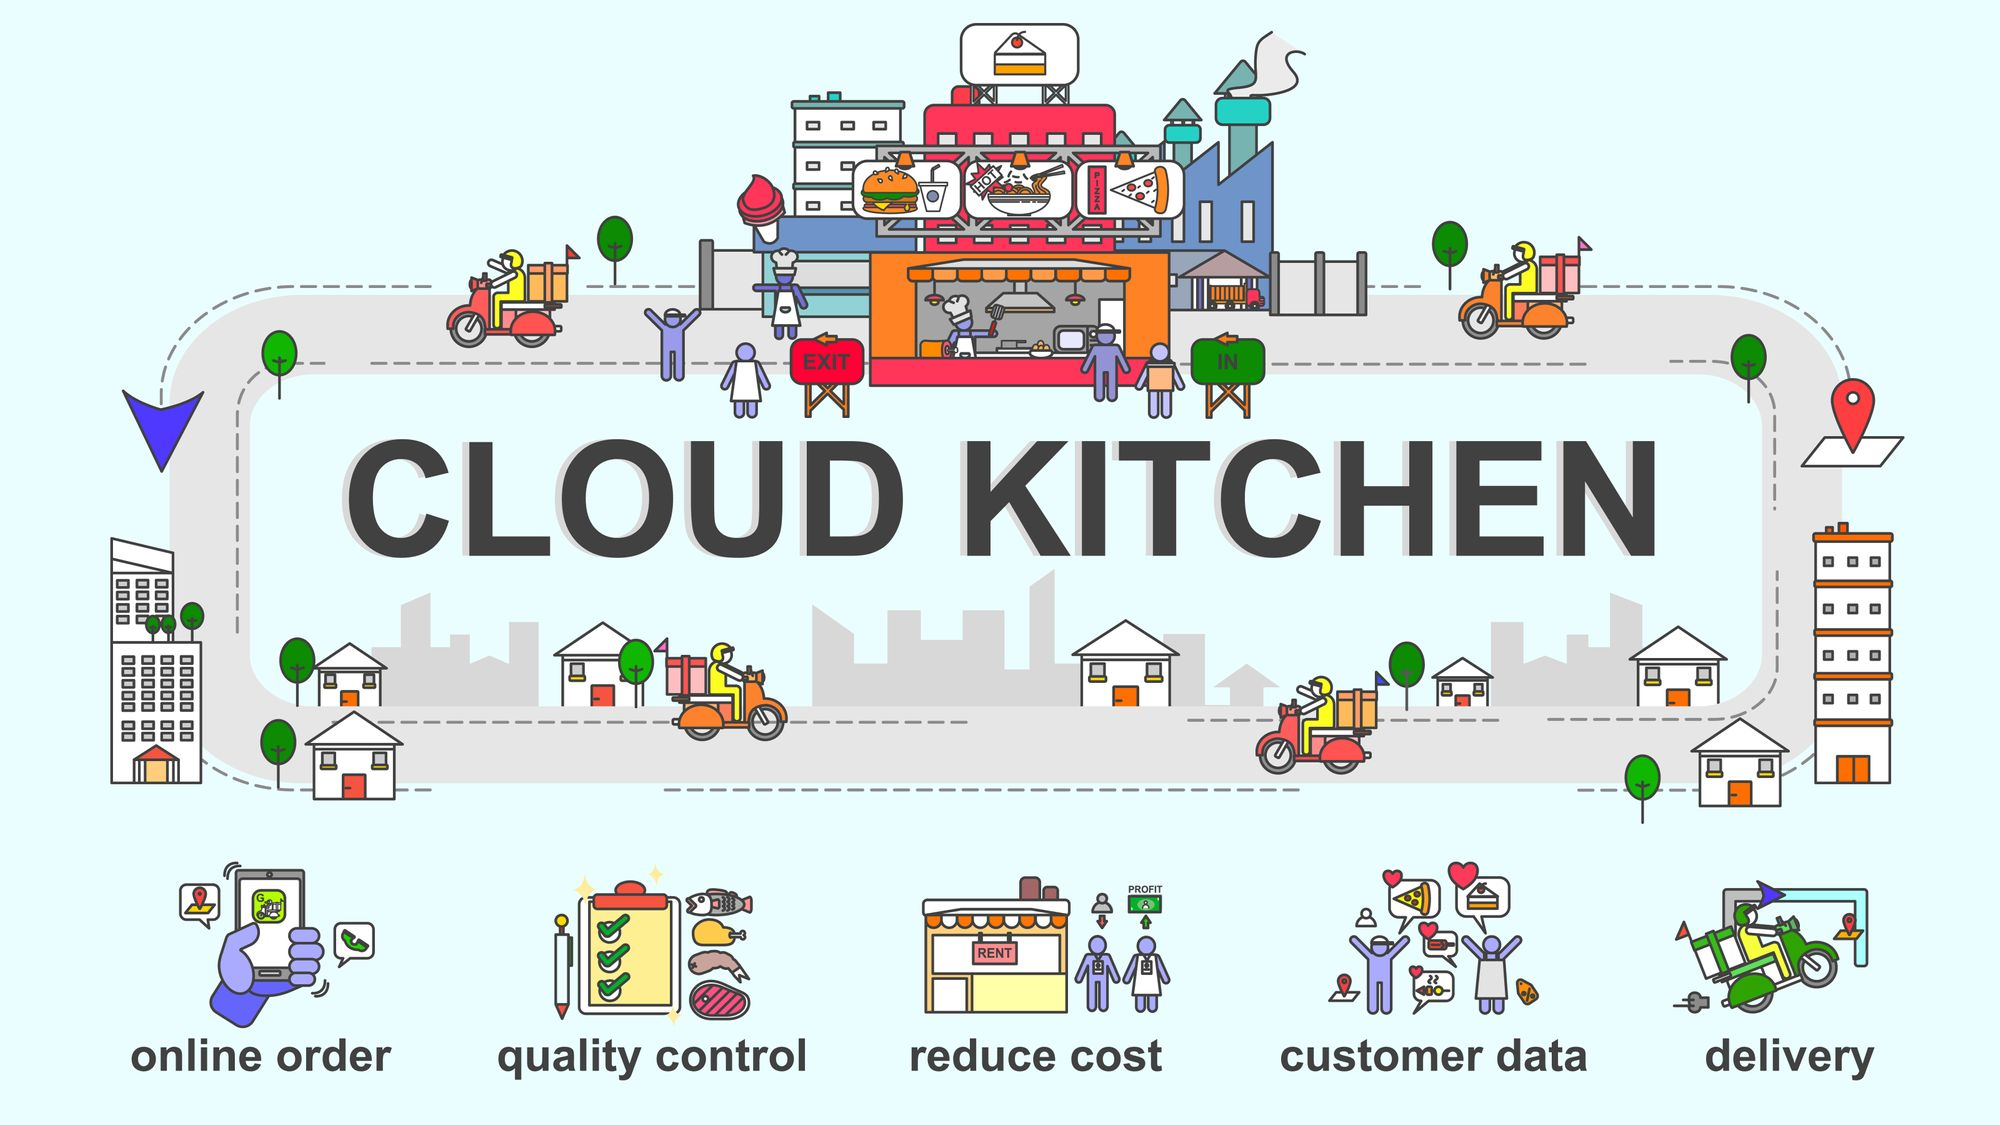 Benefits of Cloud Kitchen